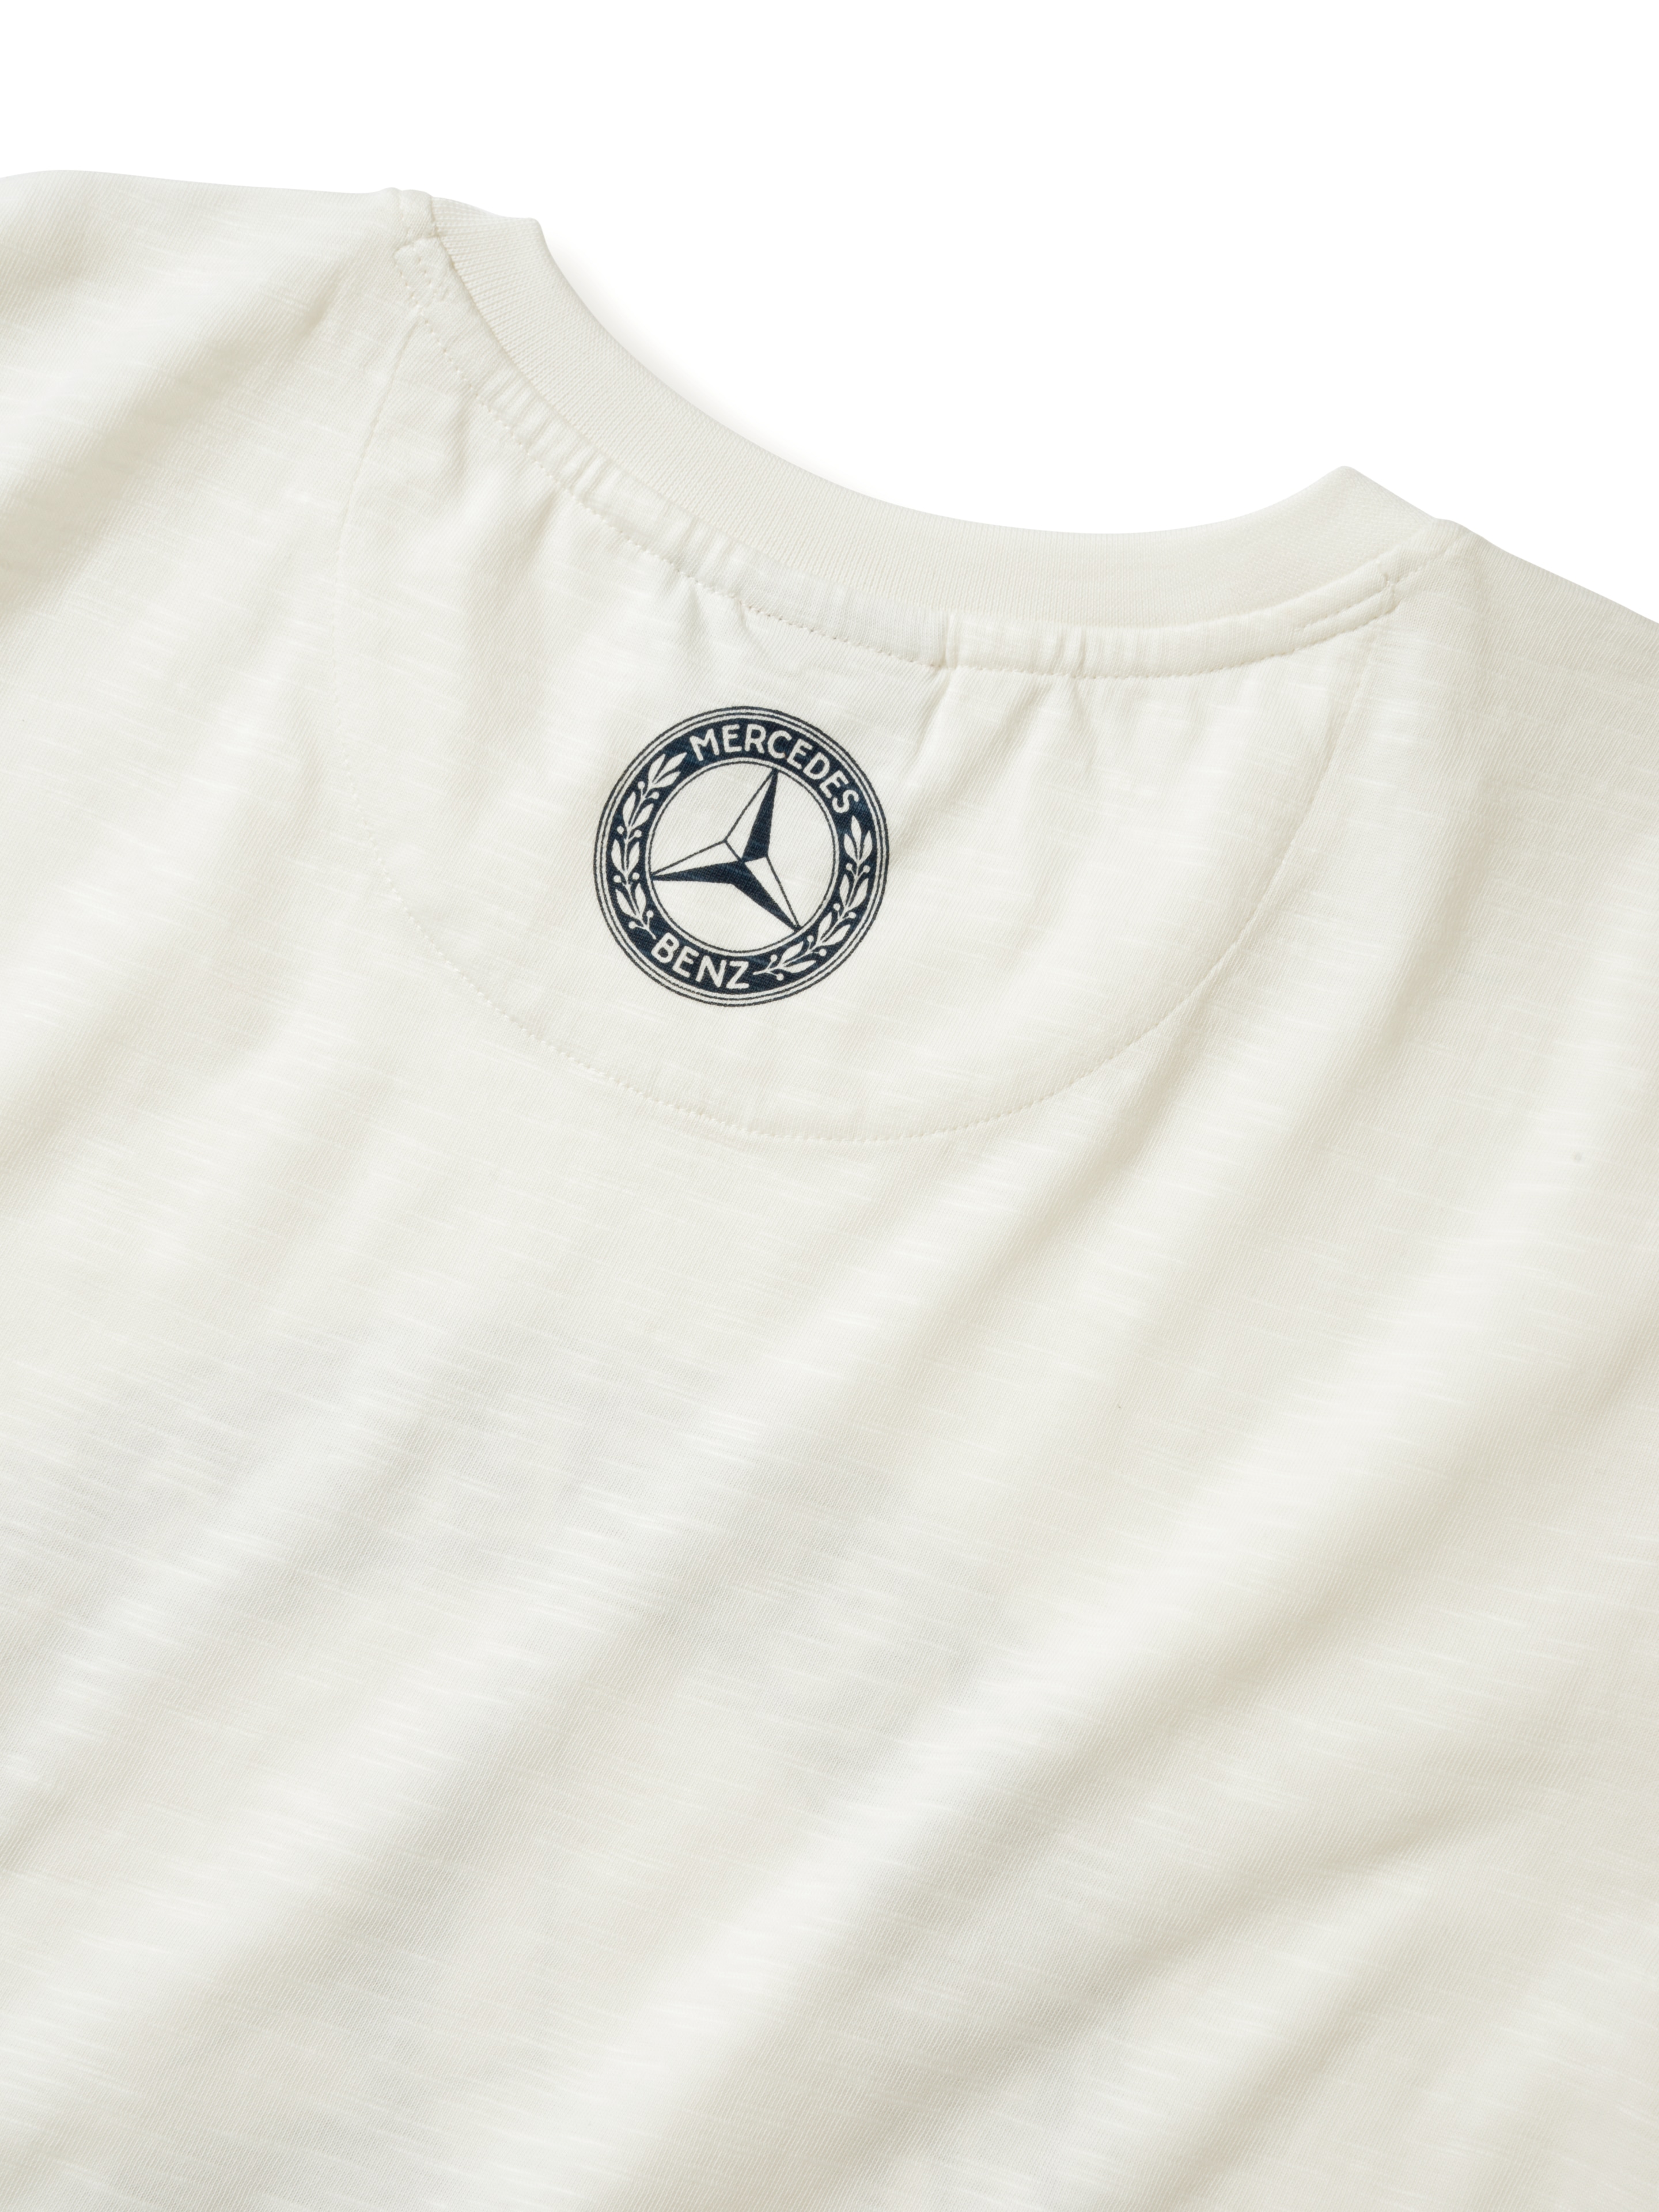 T-Shirt Herren - offwhite, XXL